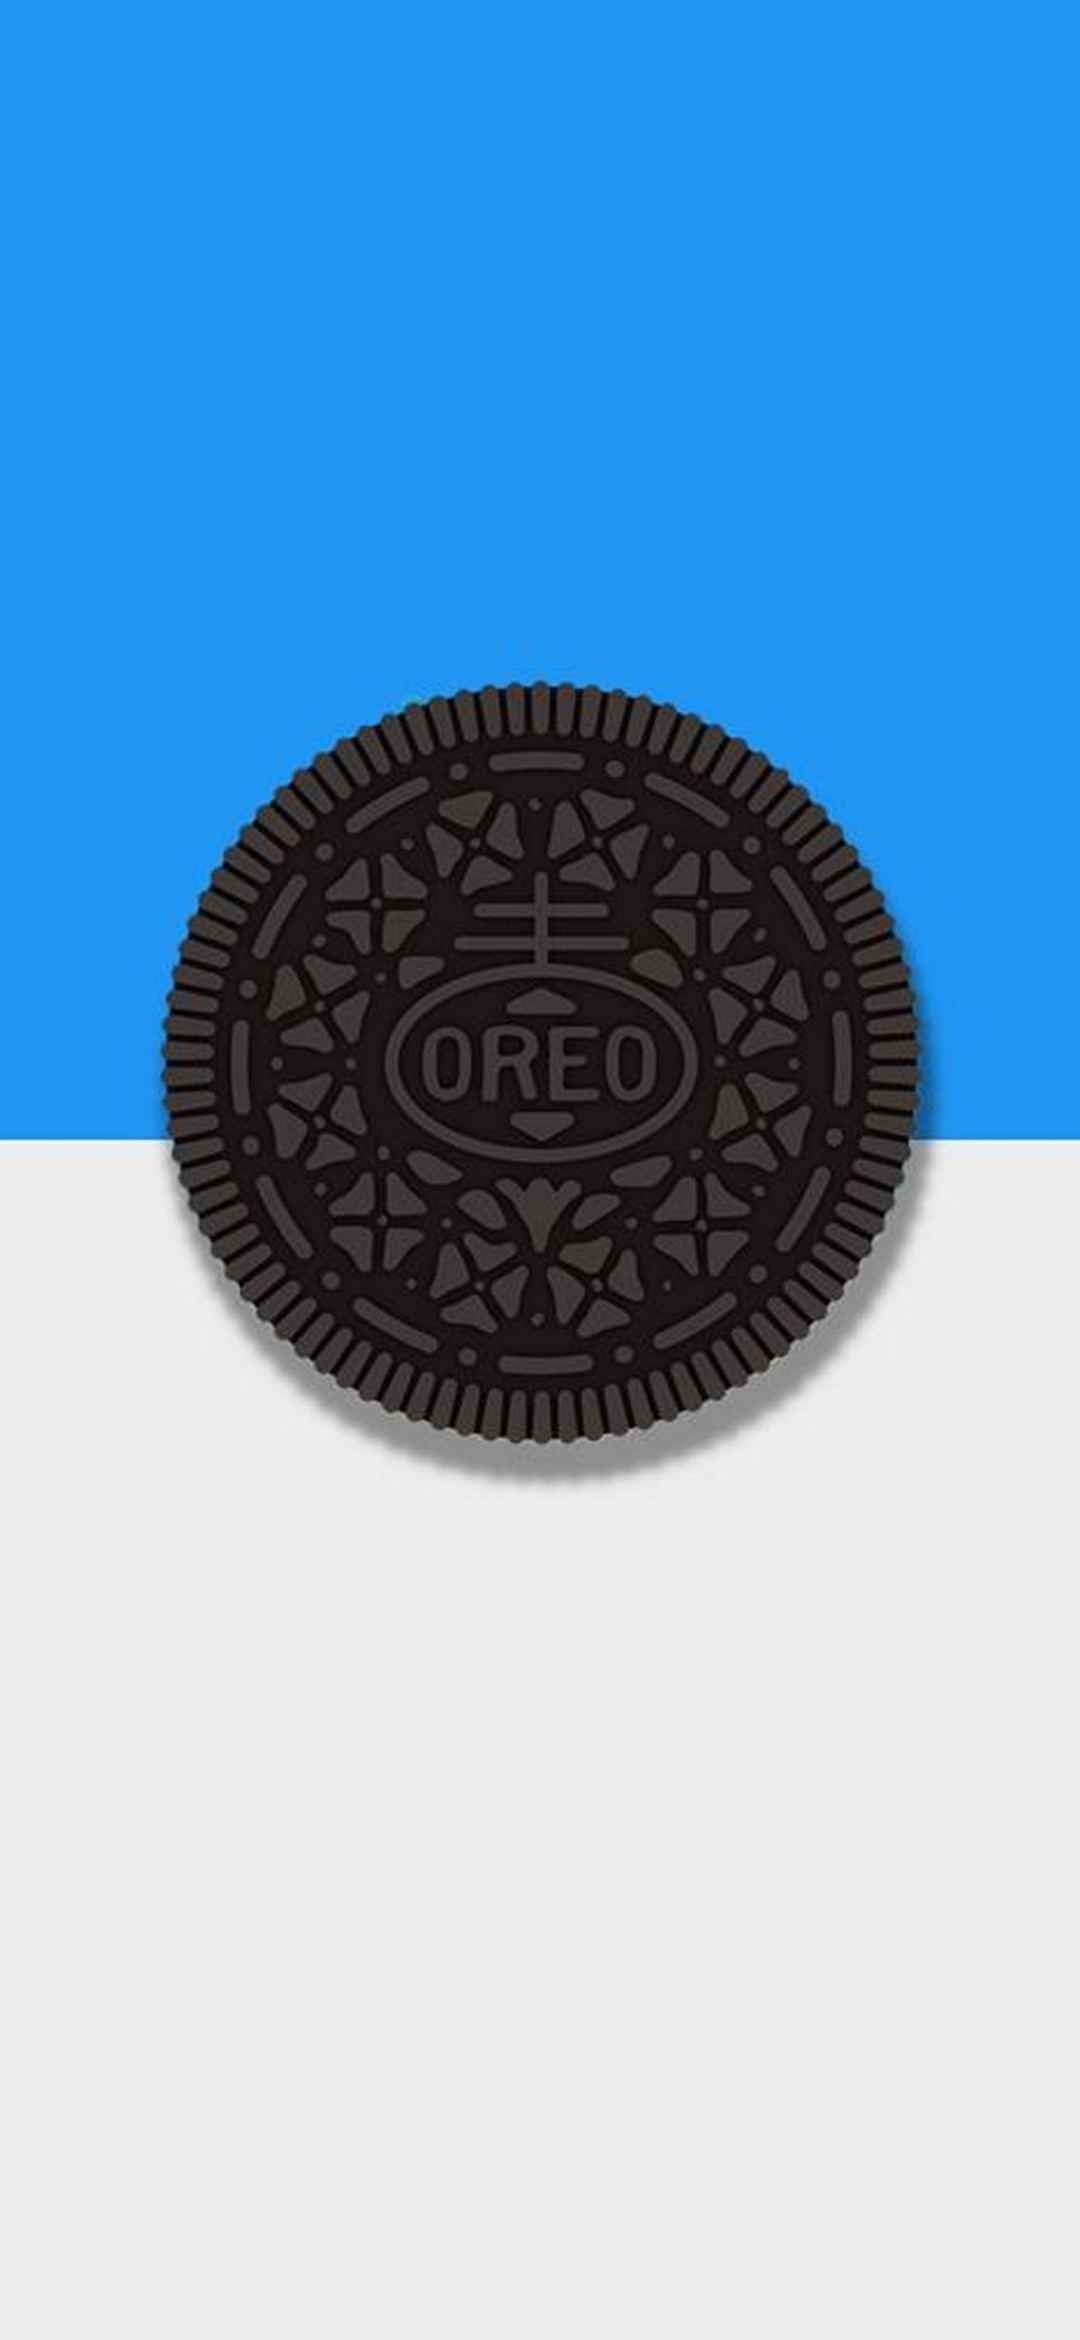 Oreo Cookies: Popular cookie brand, Minimal, Baked good. 1080x2340 HD Background.